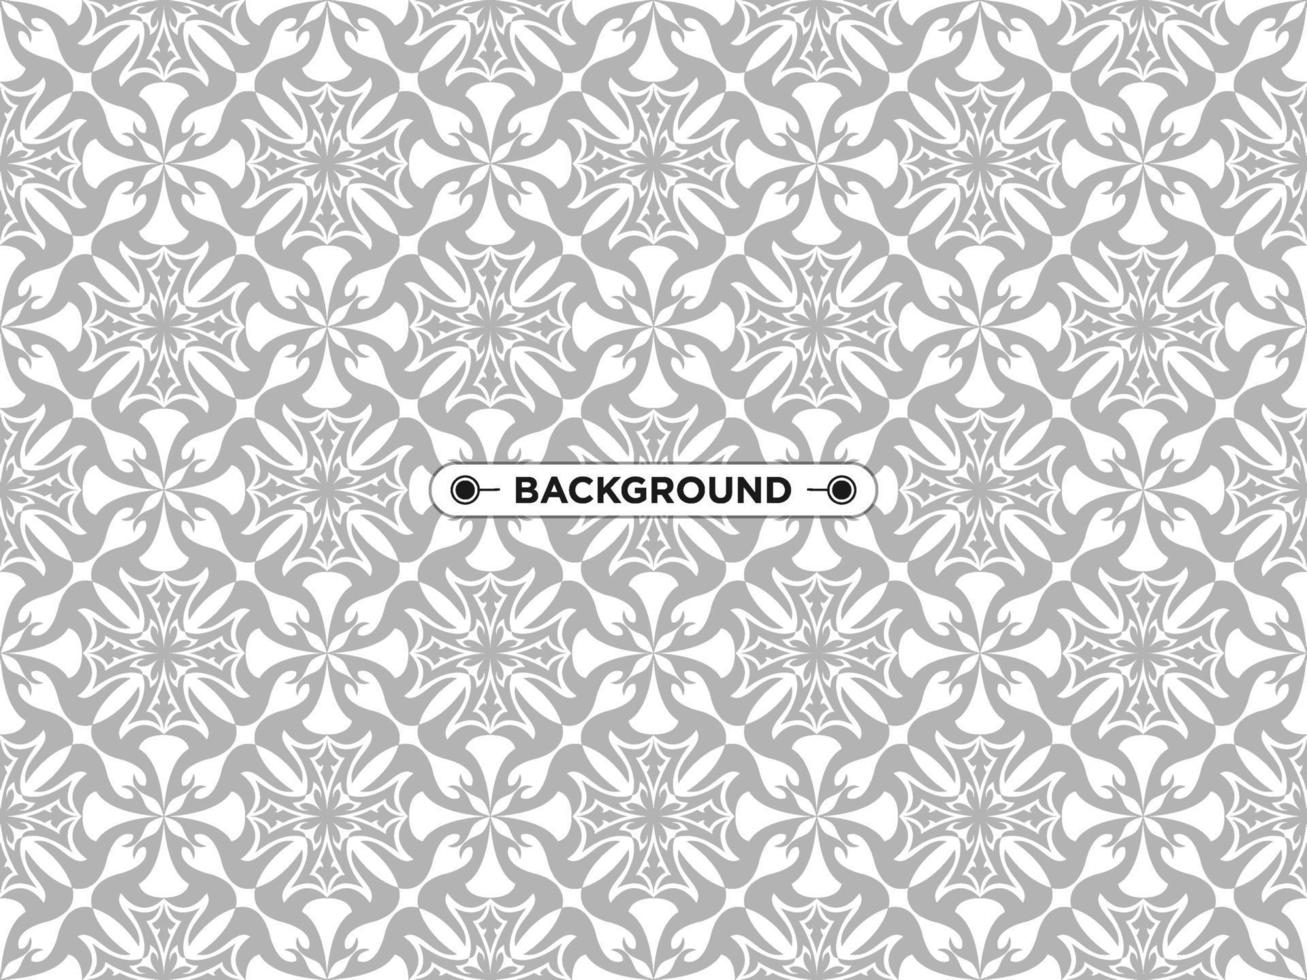 gray ethnic mandala seamless pattern background vector